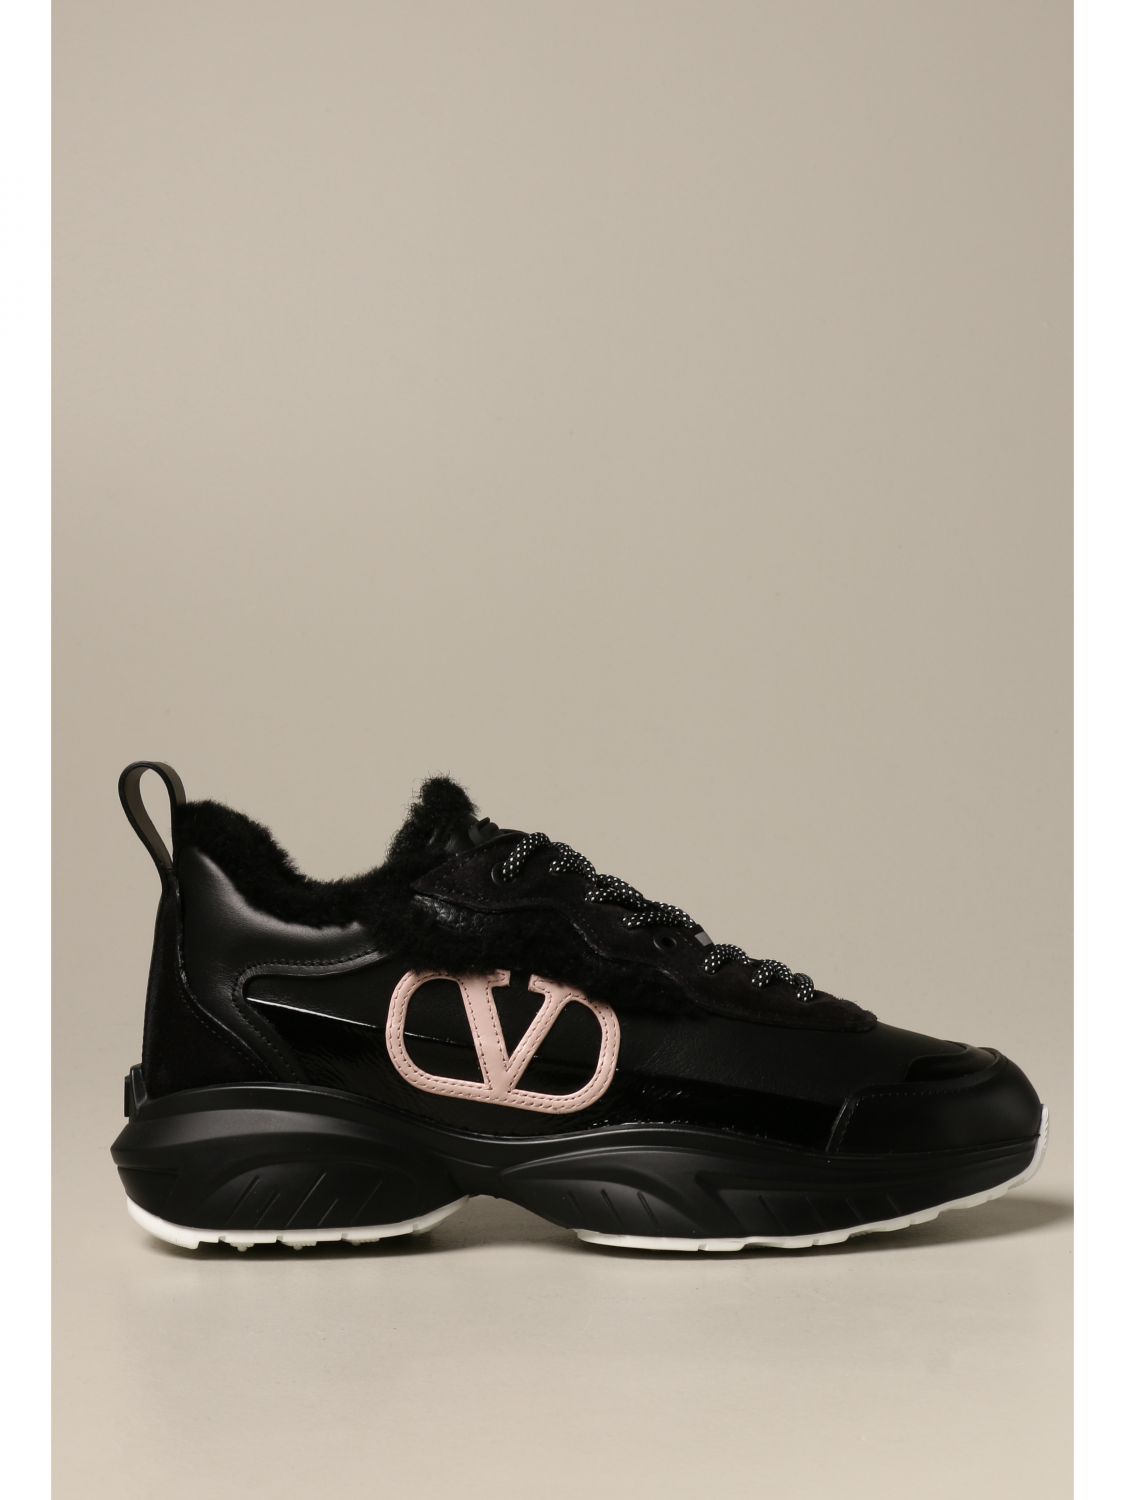 valentino garavani women's sneakers